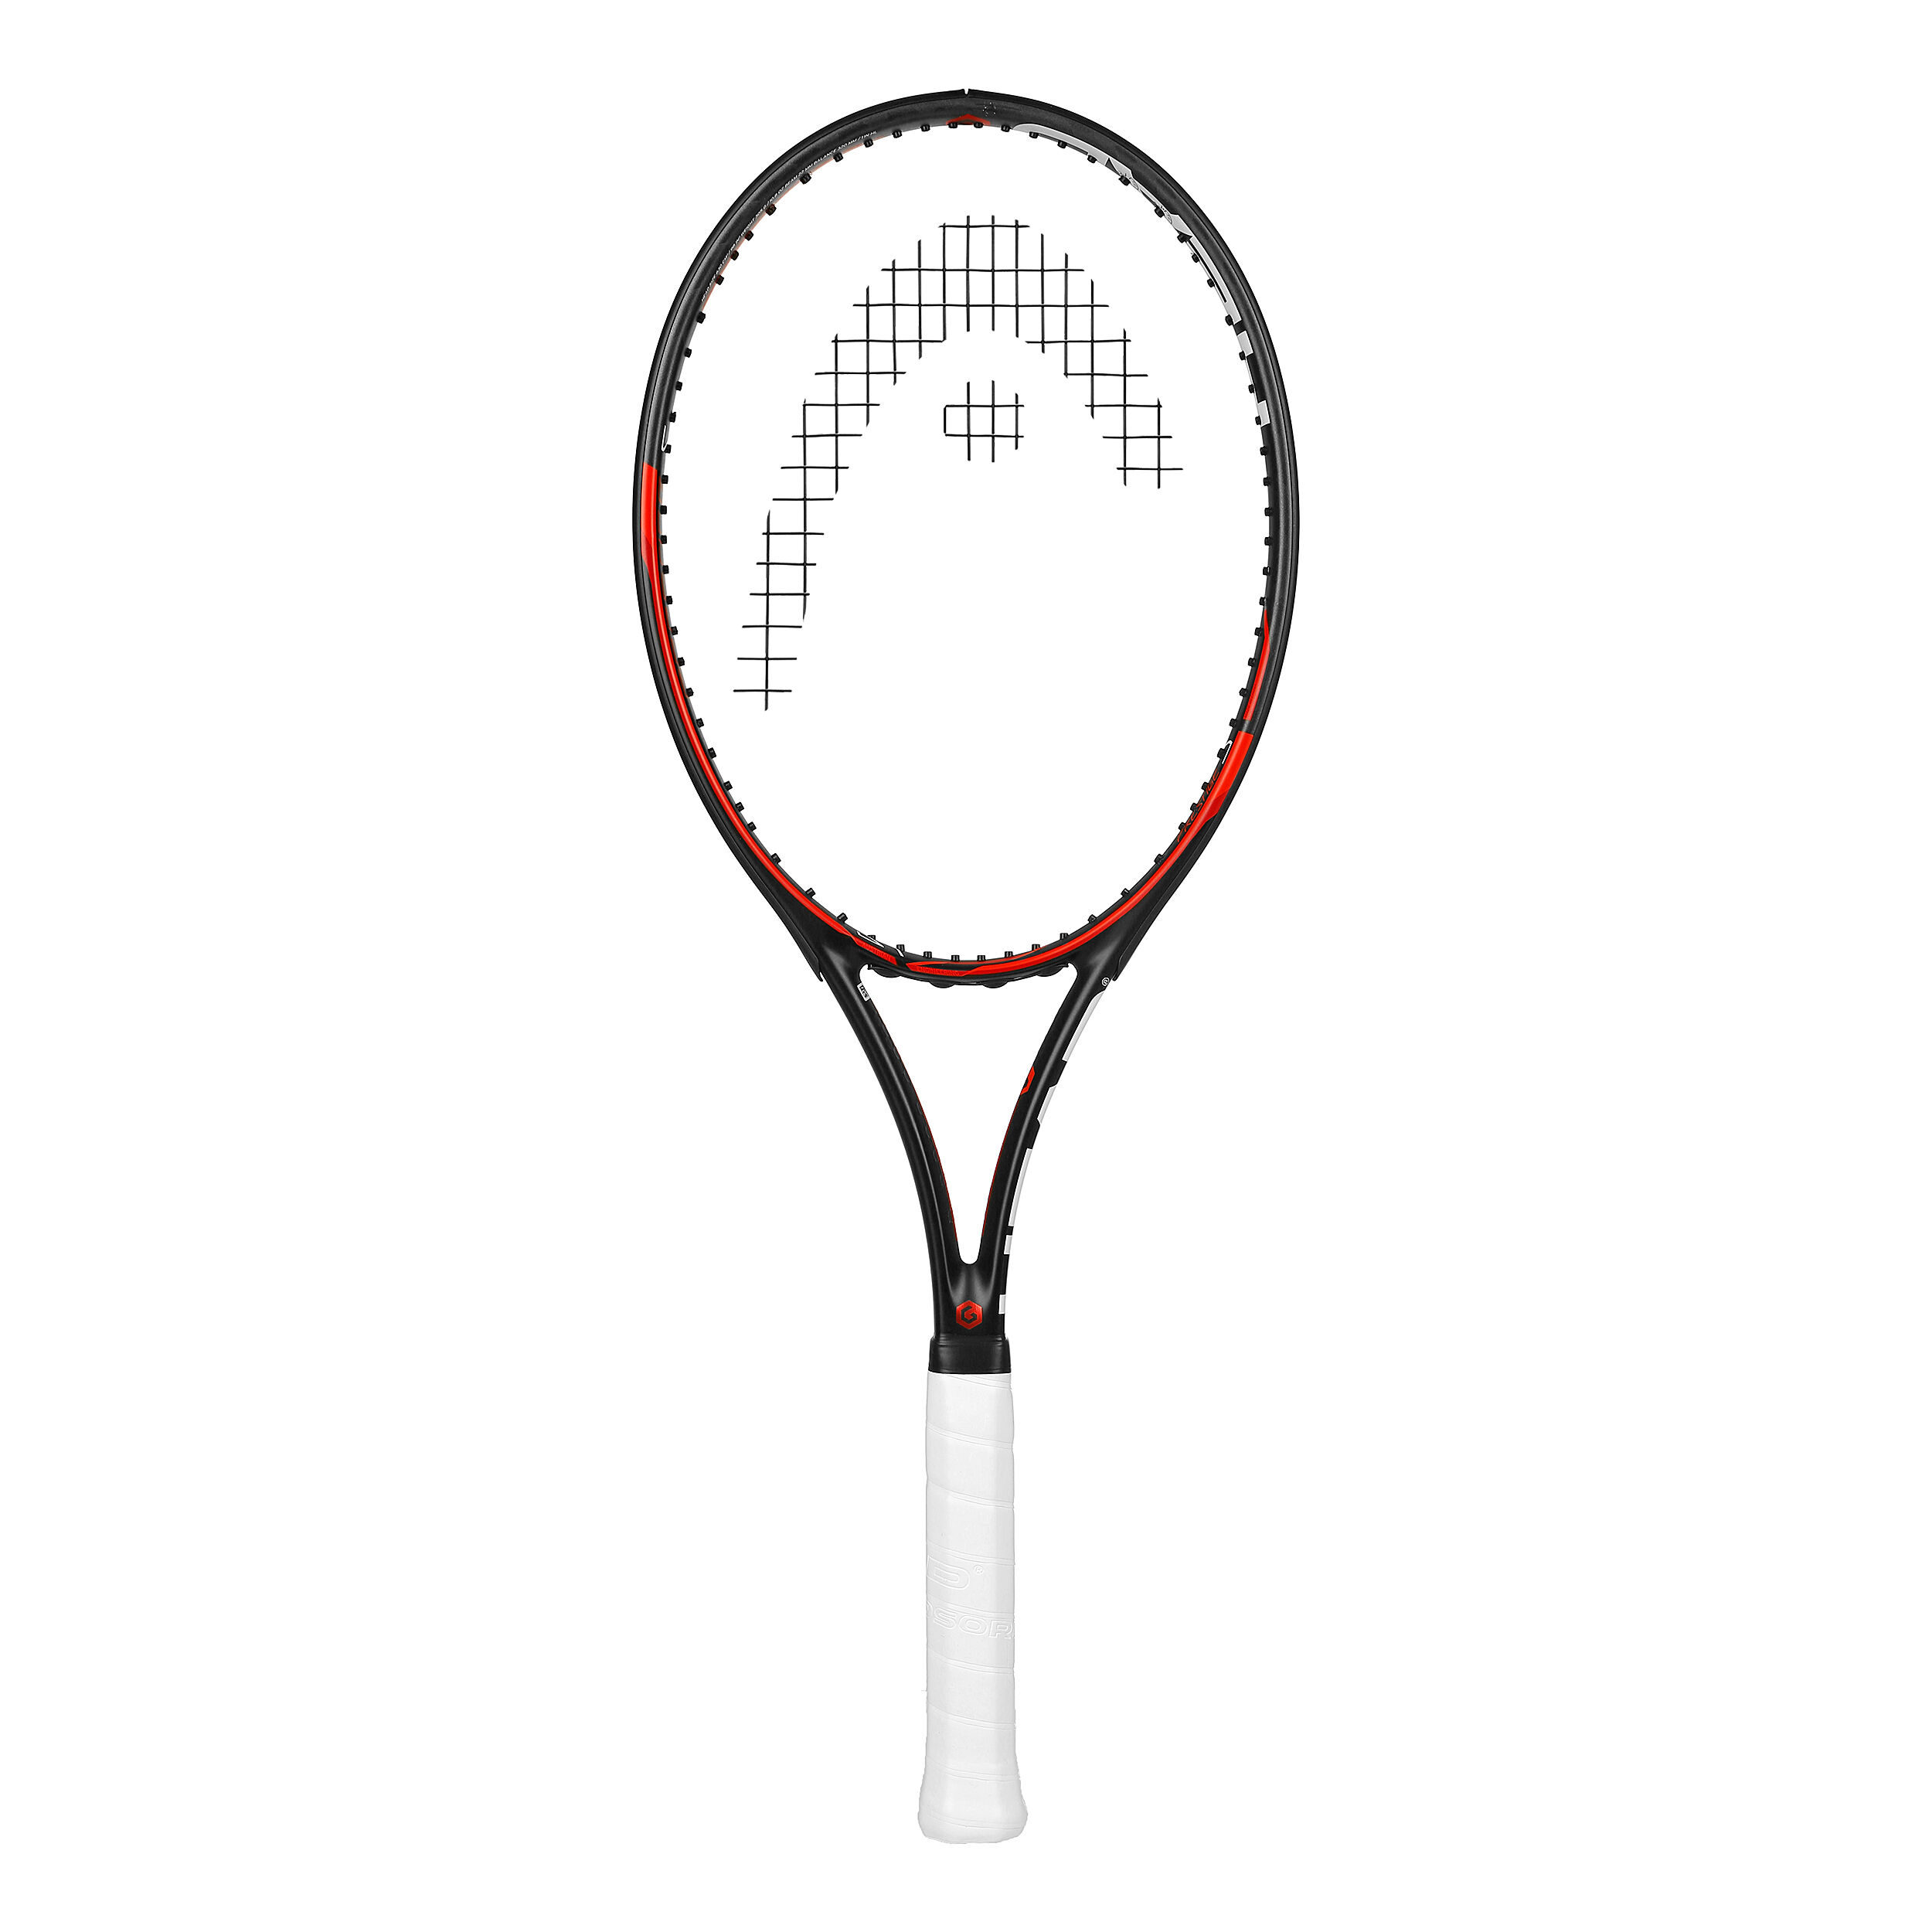 Head Graphene XT Prestige S Tennisschläger unbesaitet NEU UVP 249,95€ 